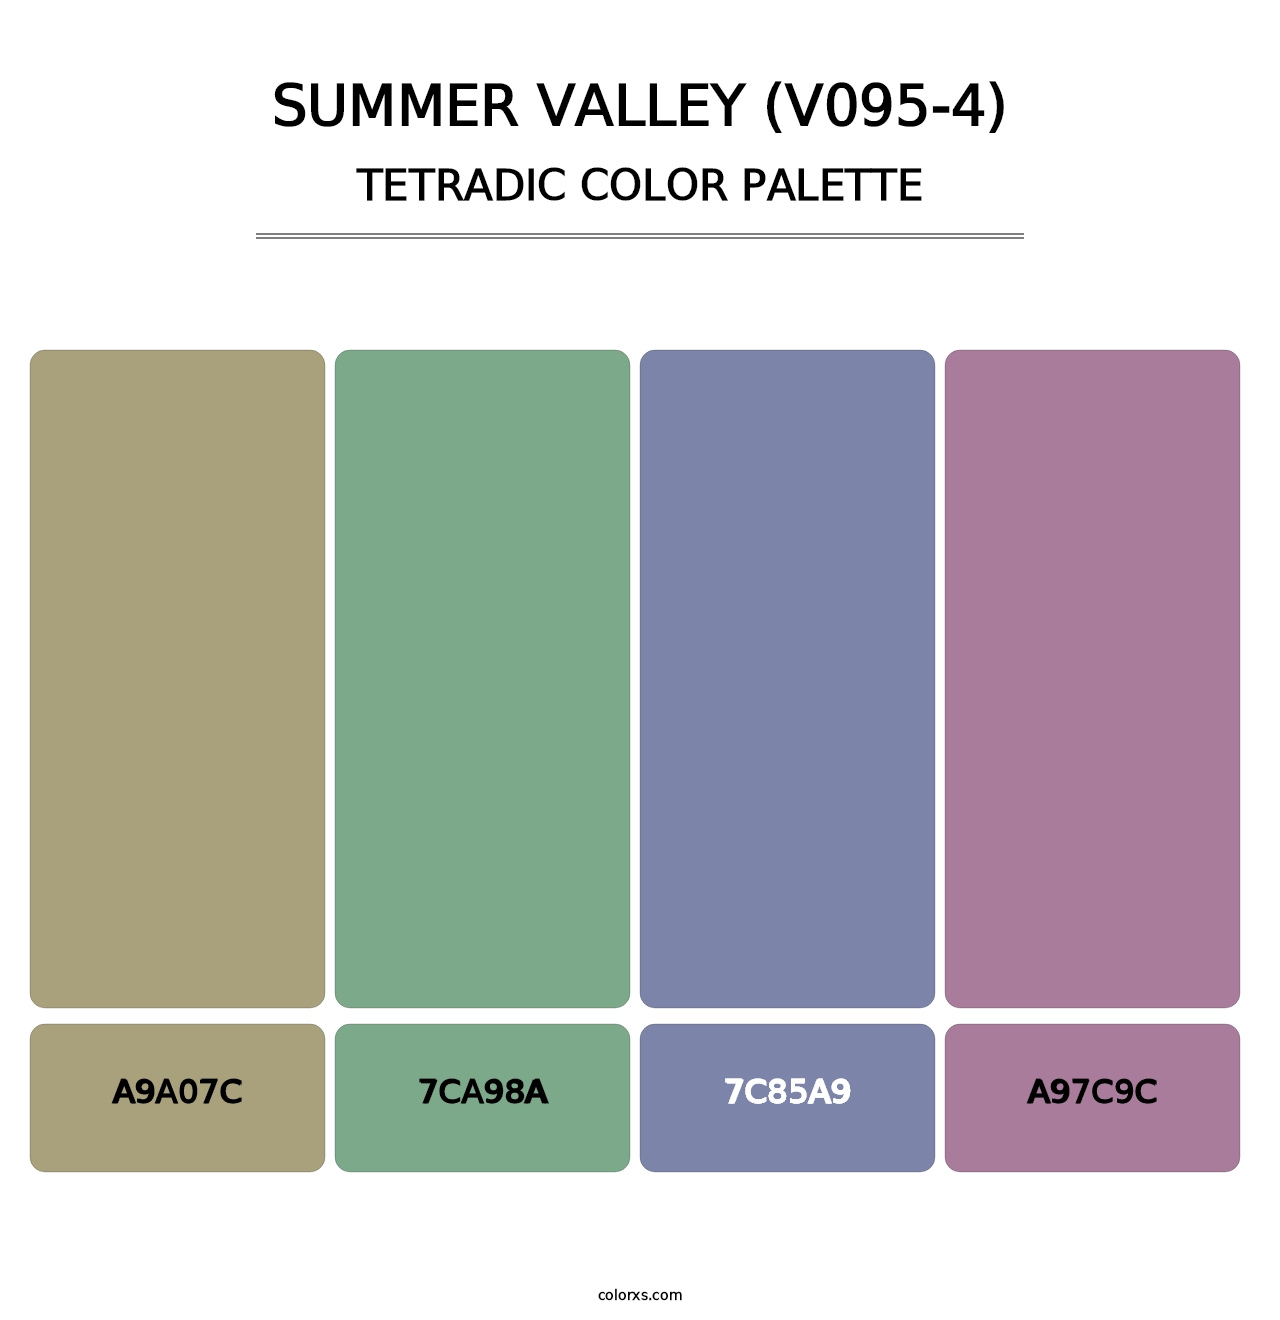 Summer Valley (V095-4) - Tetradic Color Palette